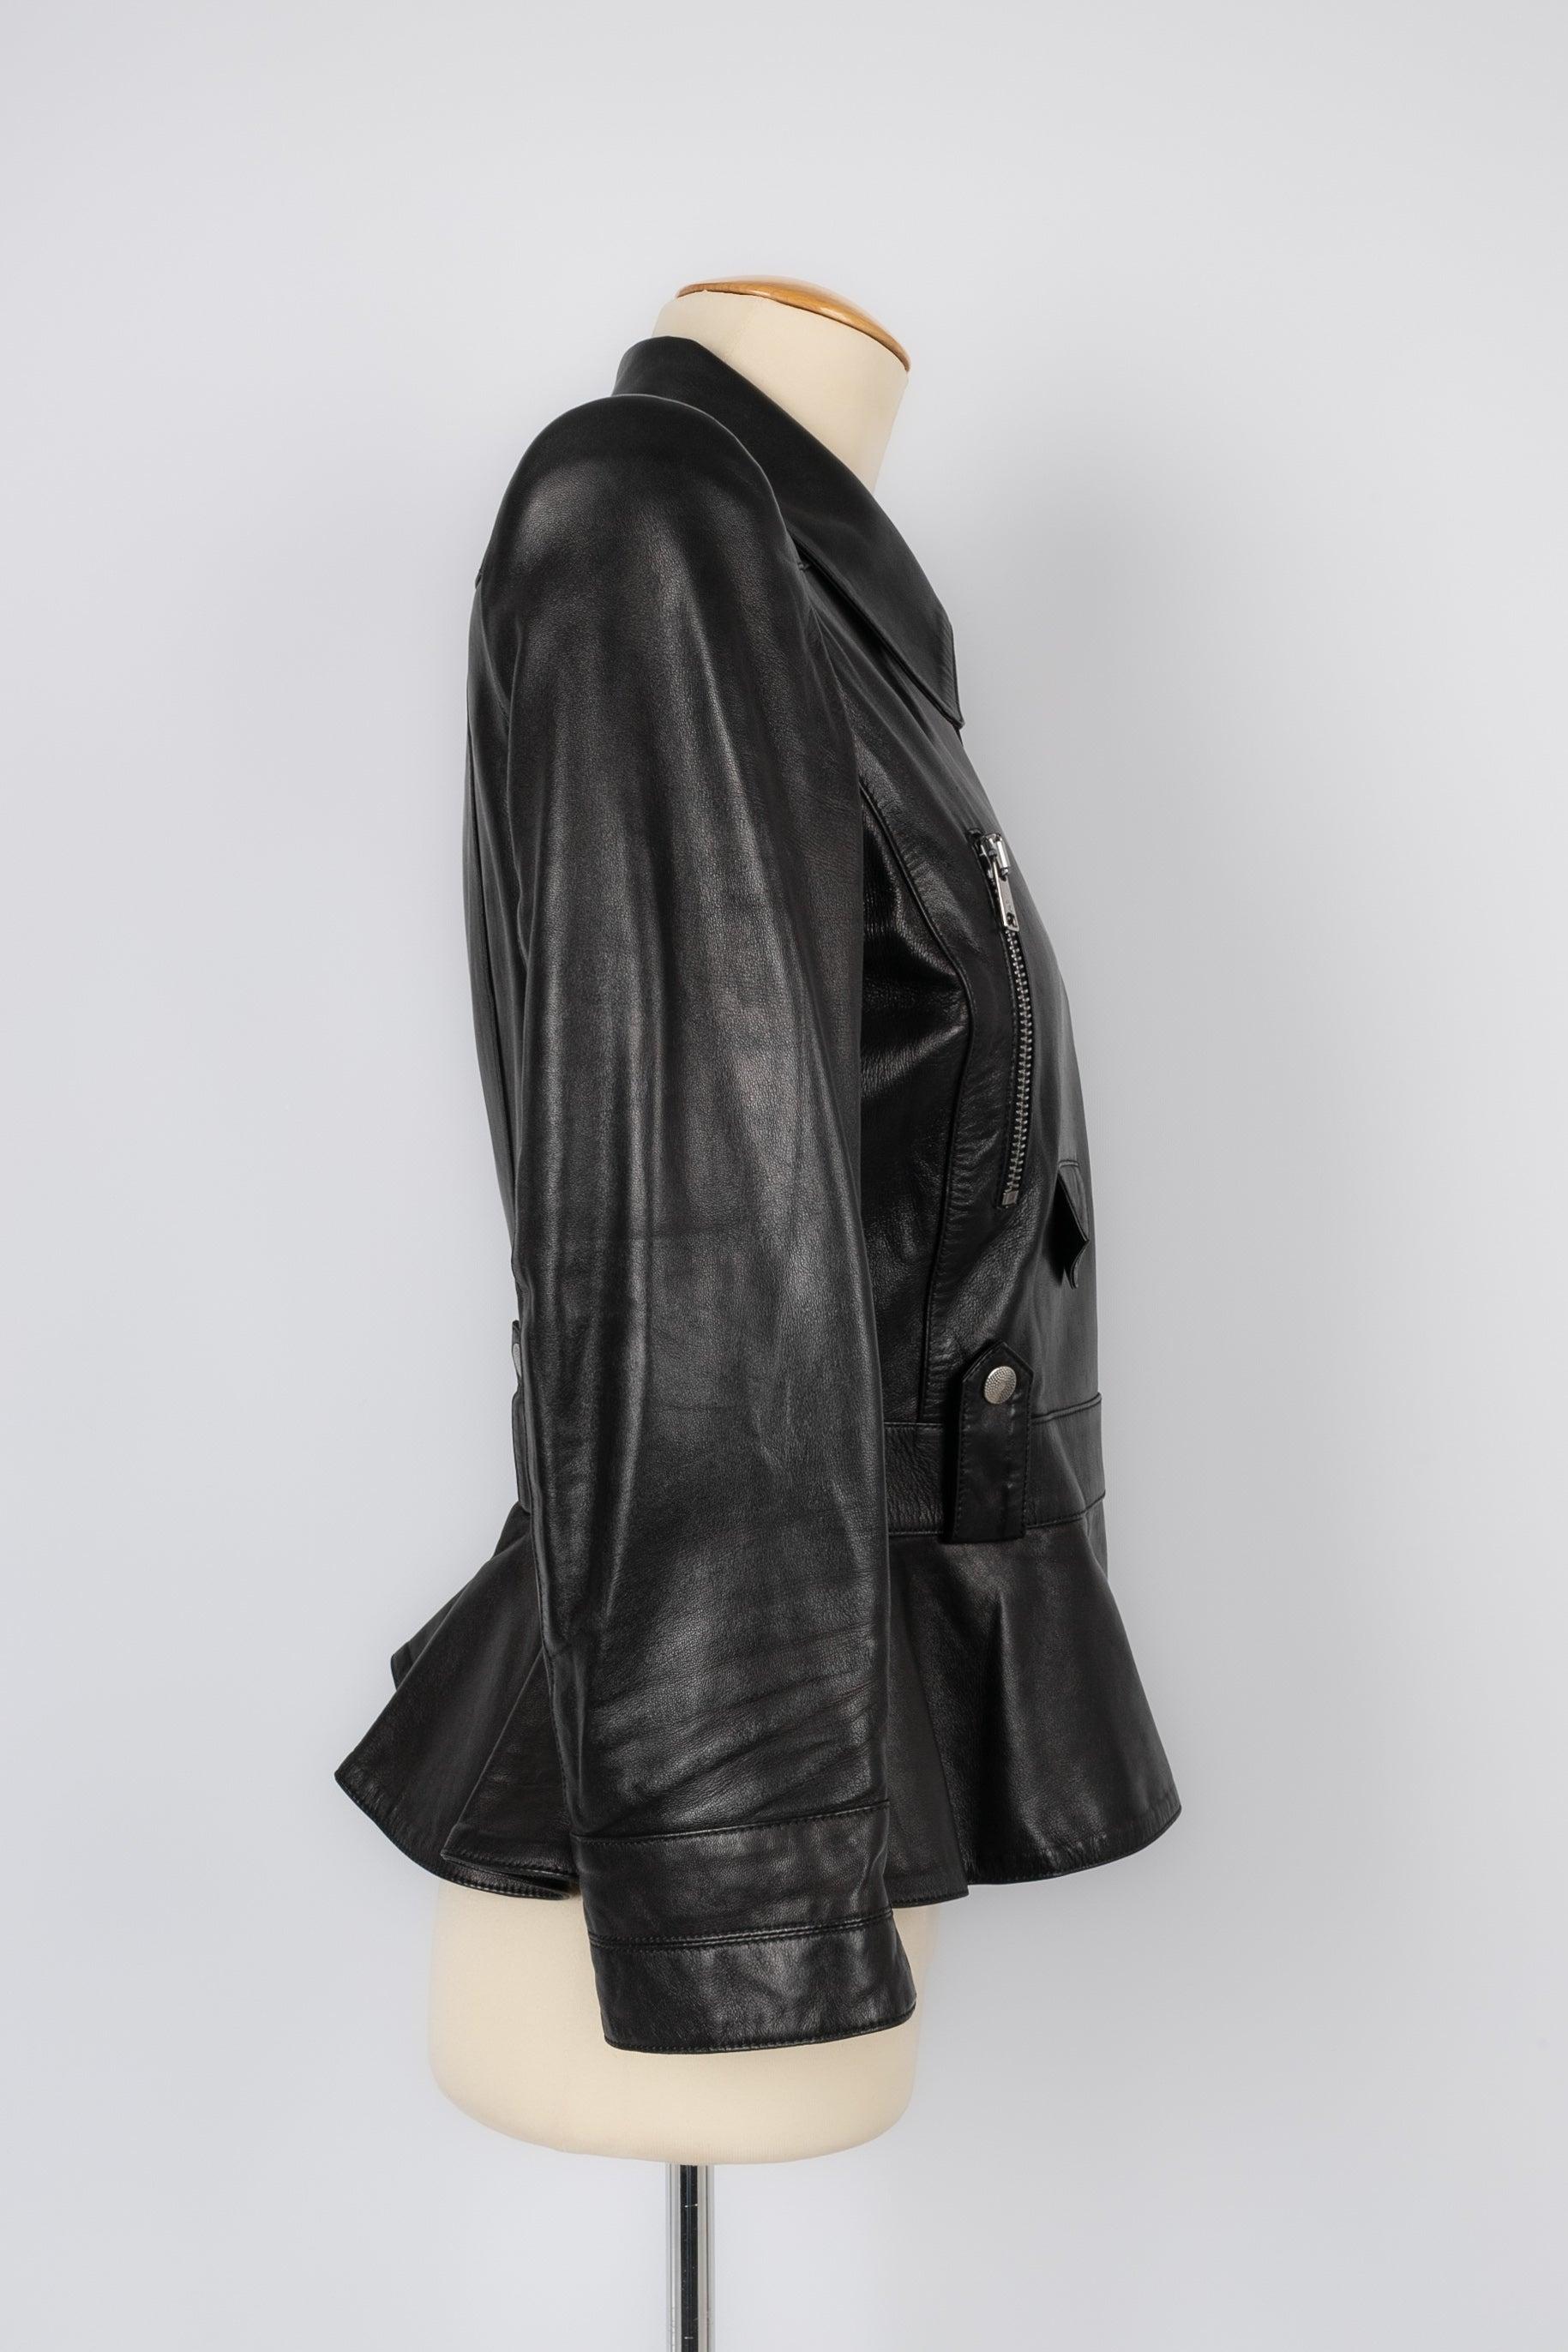 Alexander Mc Queen Black Leather Jacket For Sale 1